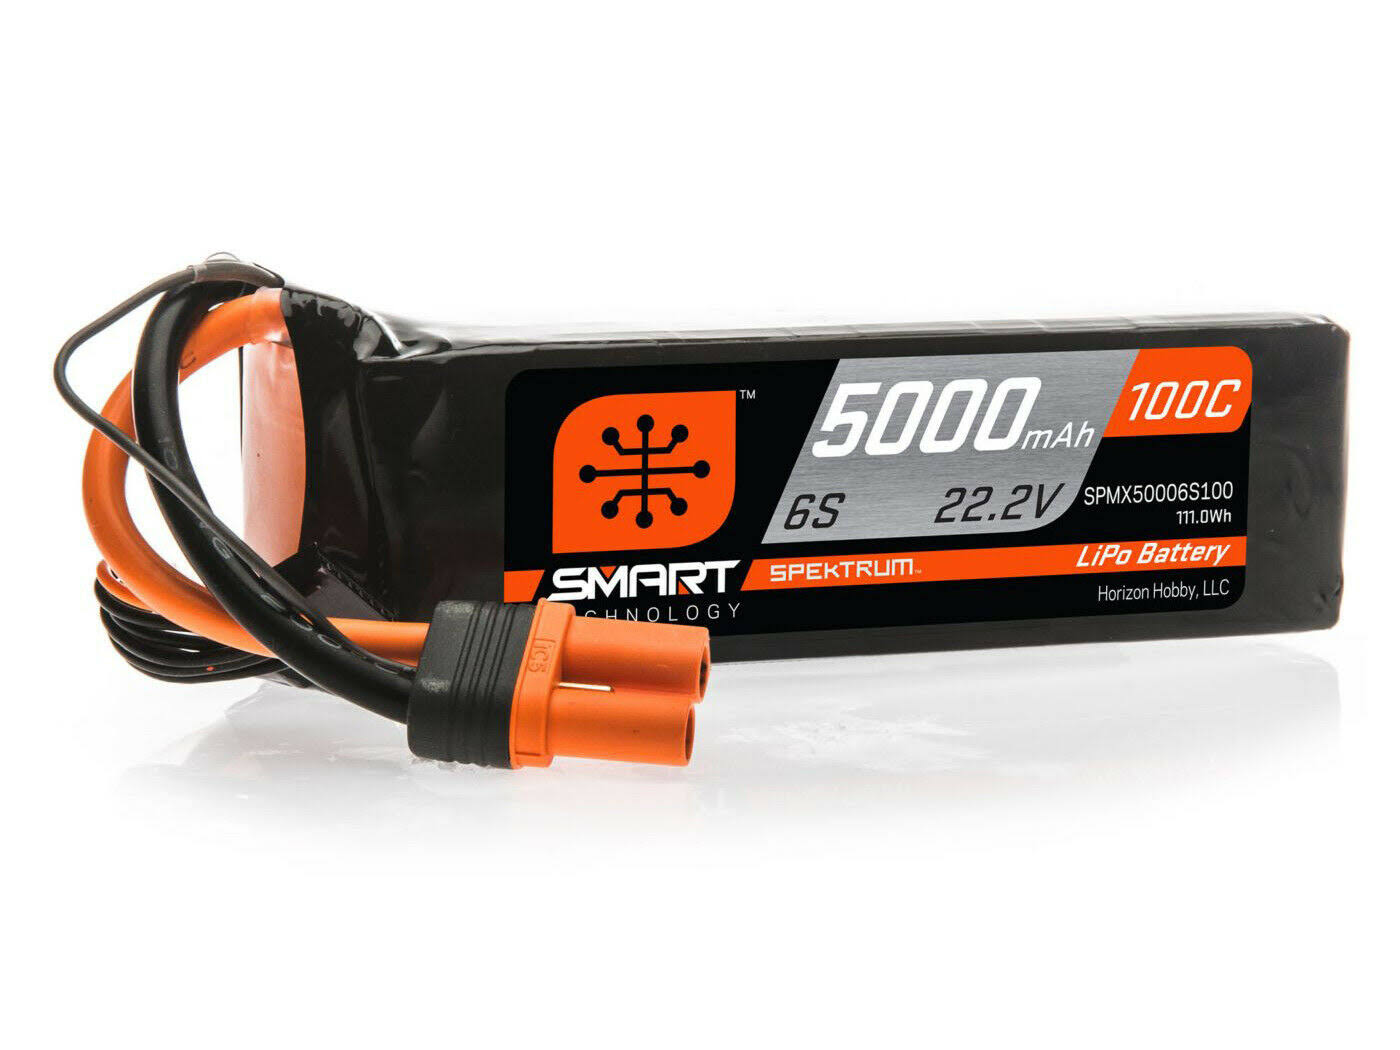 Spektrum Smart LiPo Battery - 5000mAh, 6S, 22.2V, 100C